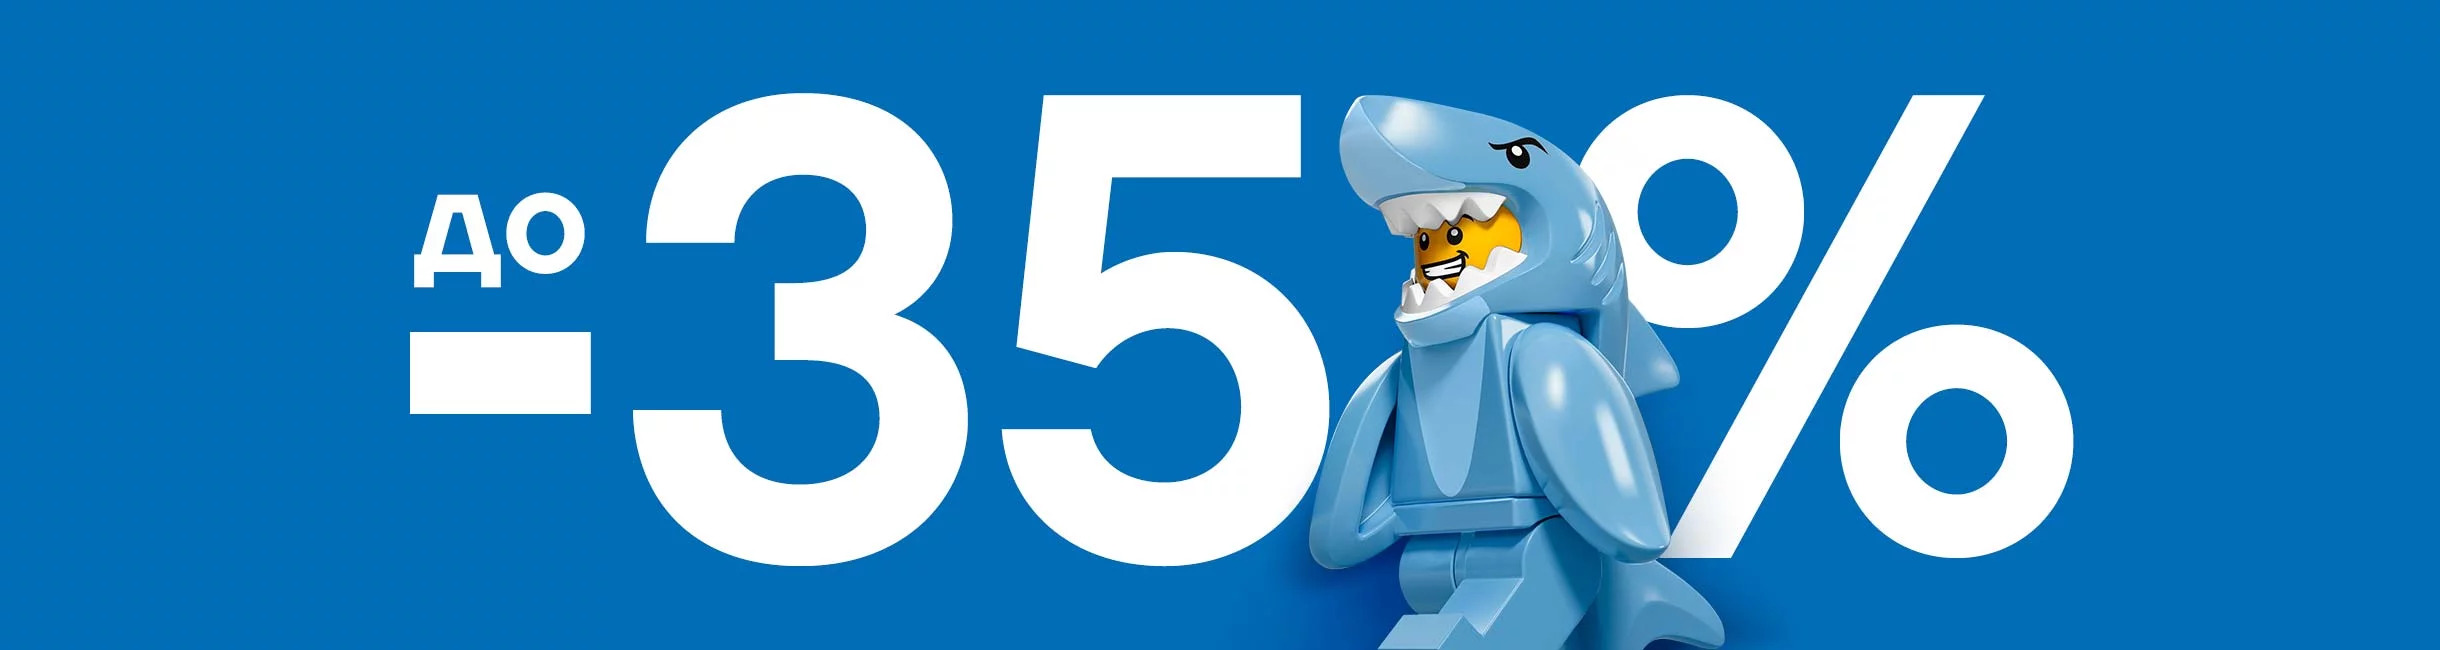 Рекламная акция Лего (LEGO) «Поймайте акулу покрупнее!»